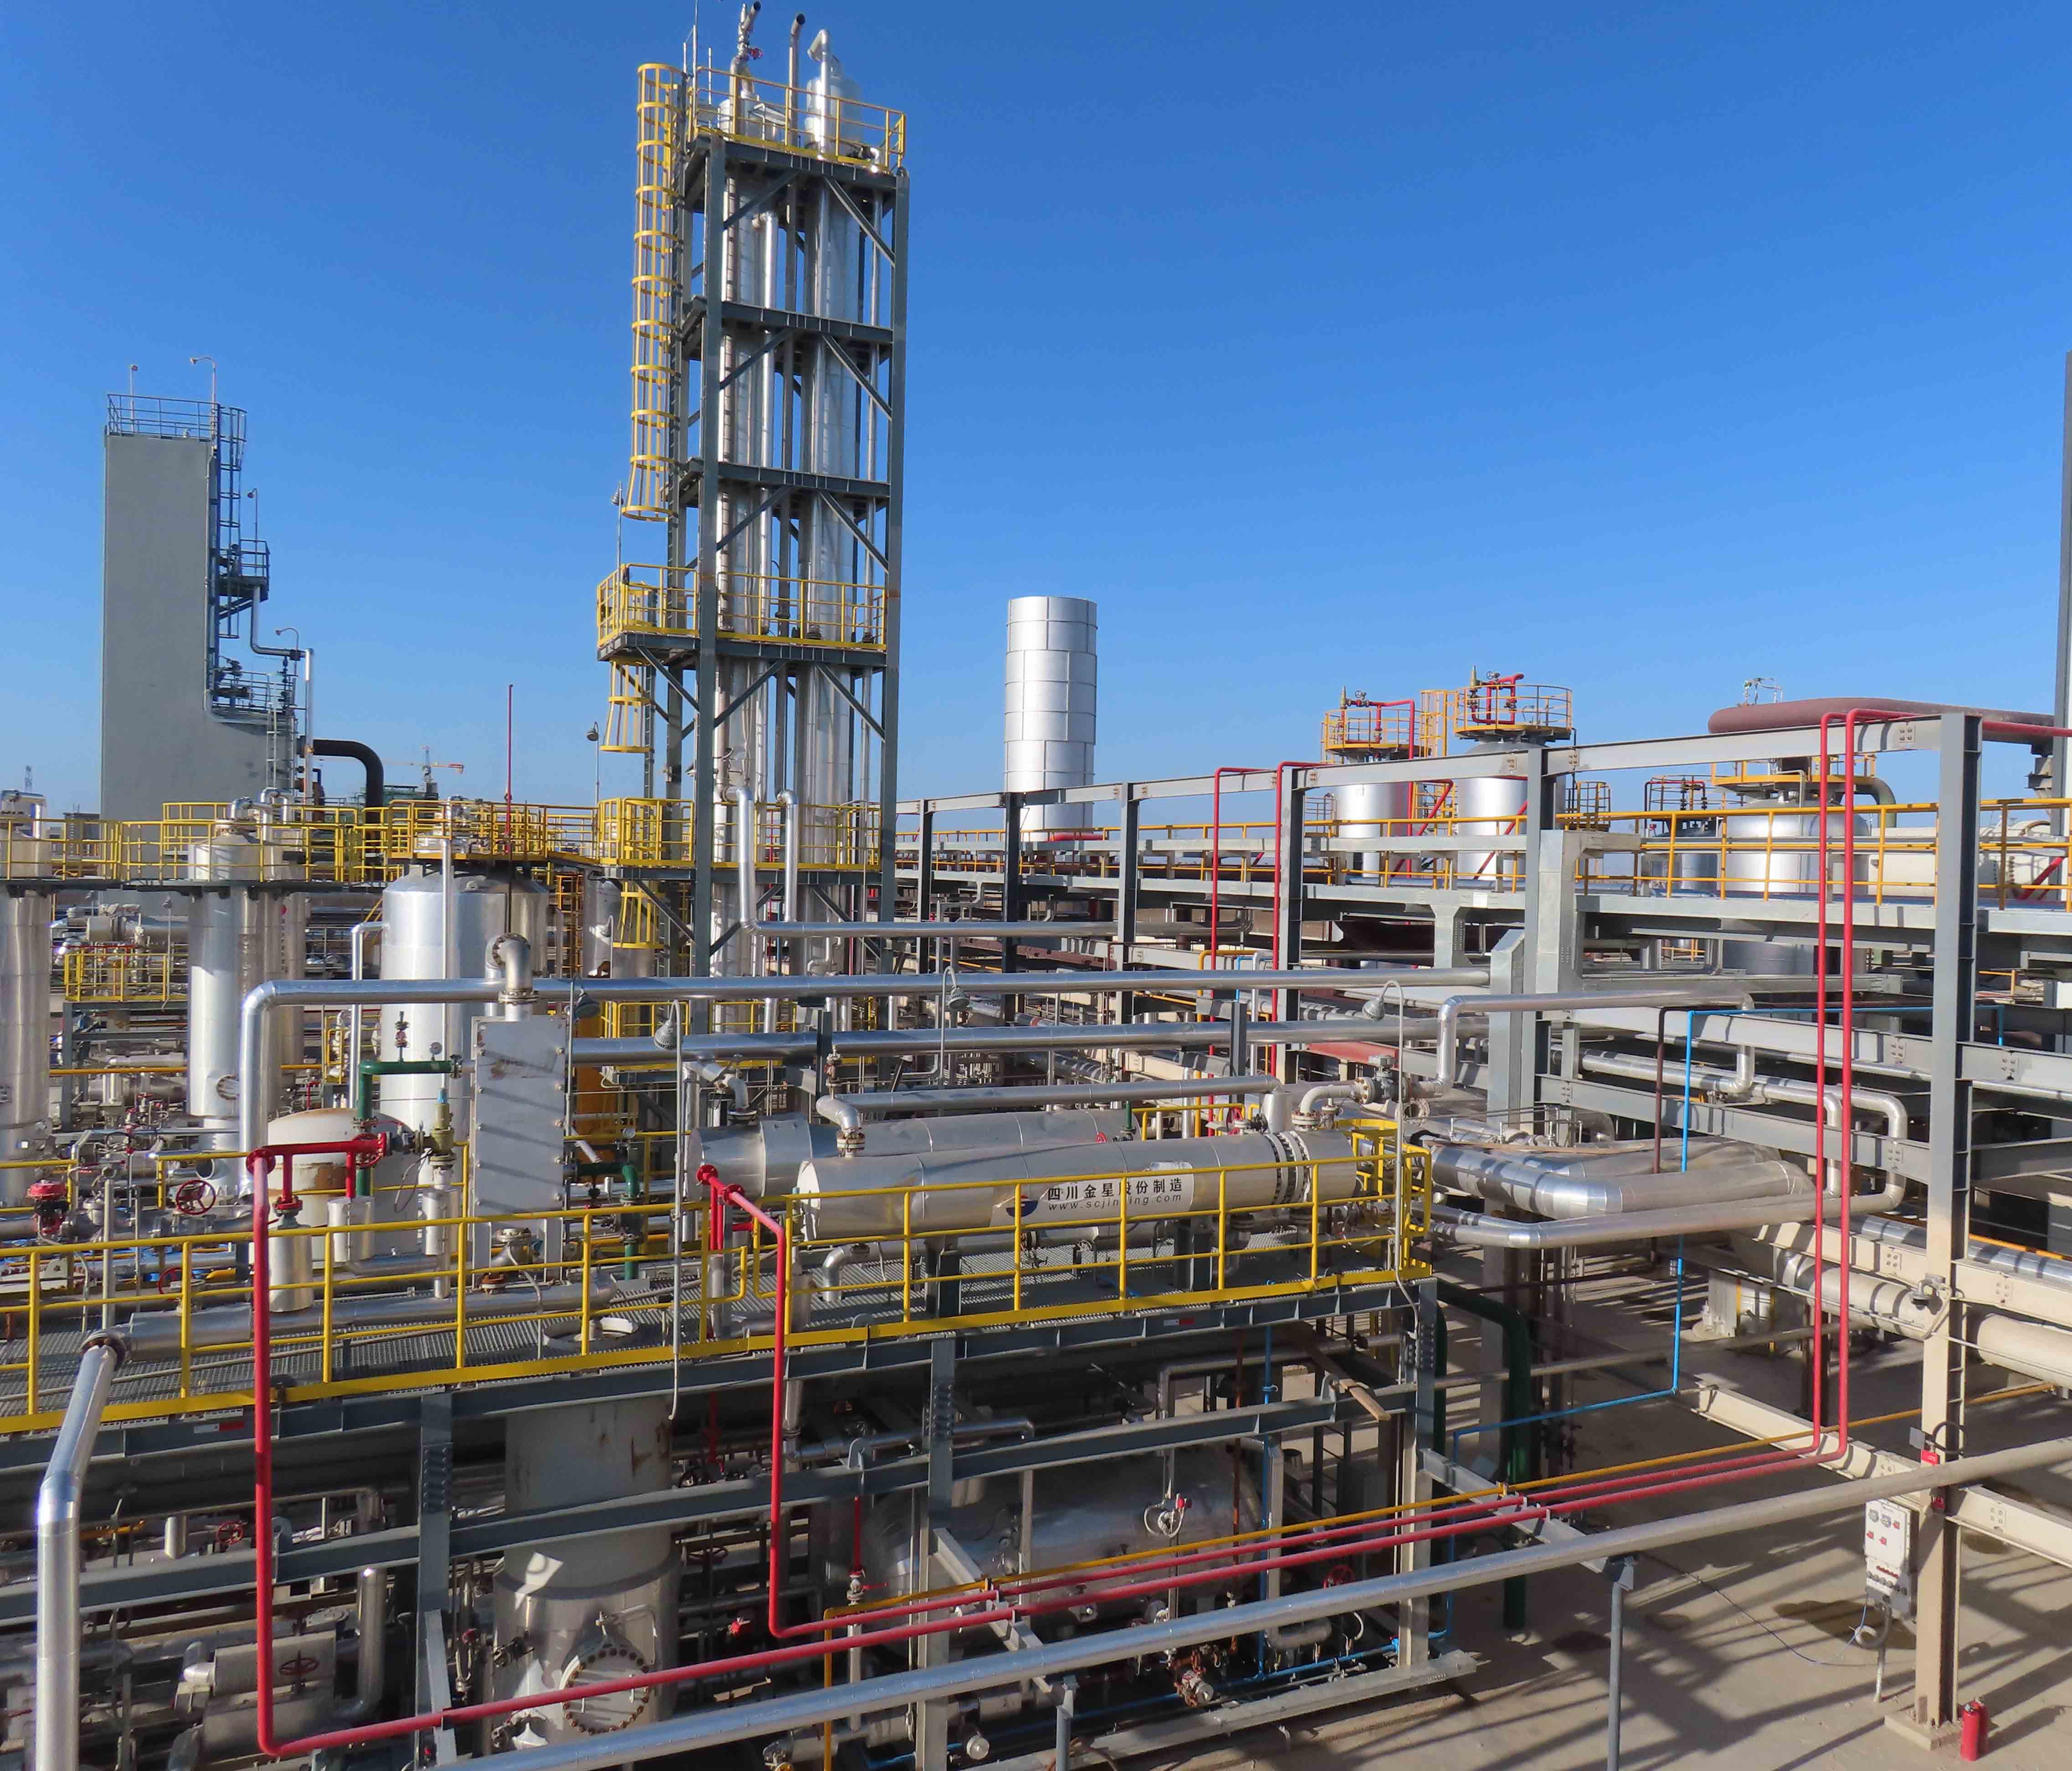 Tehnologija LNG procesa ima značajan napredak u industriji prerade prirodnog plina